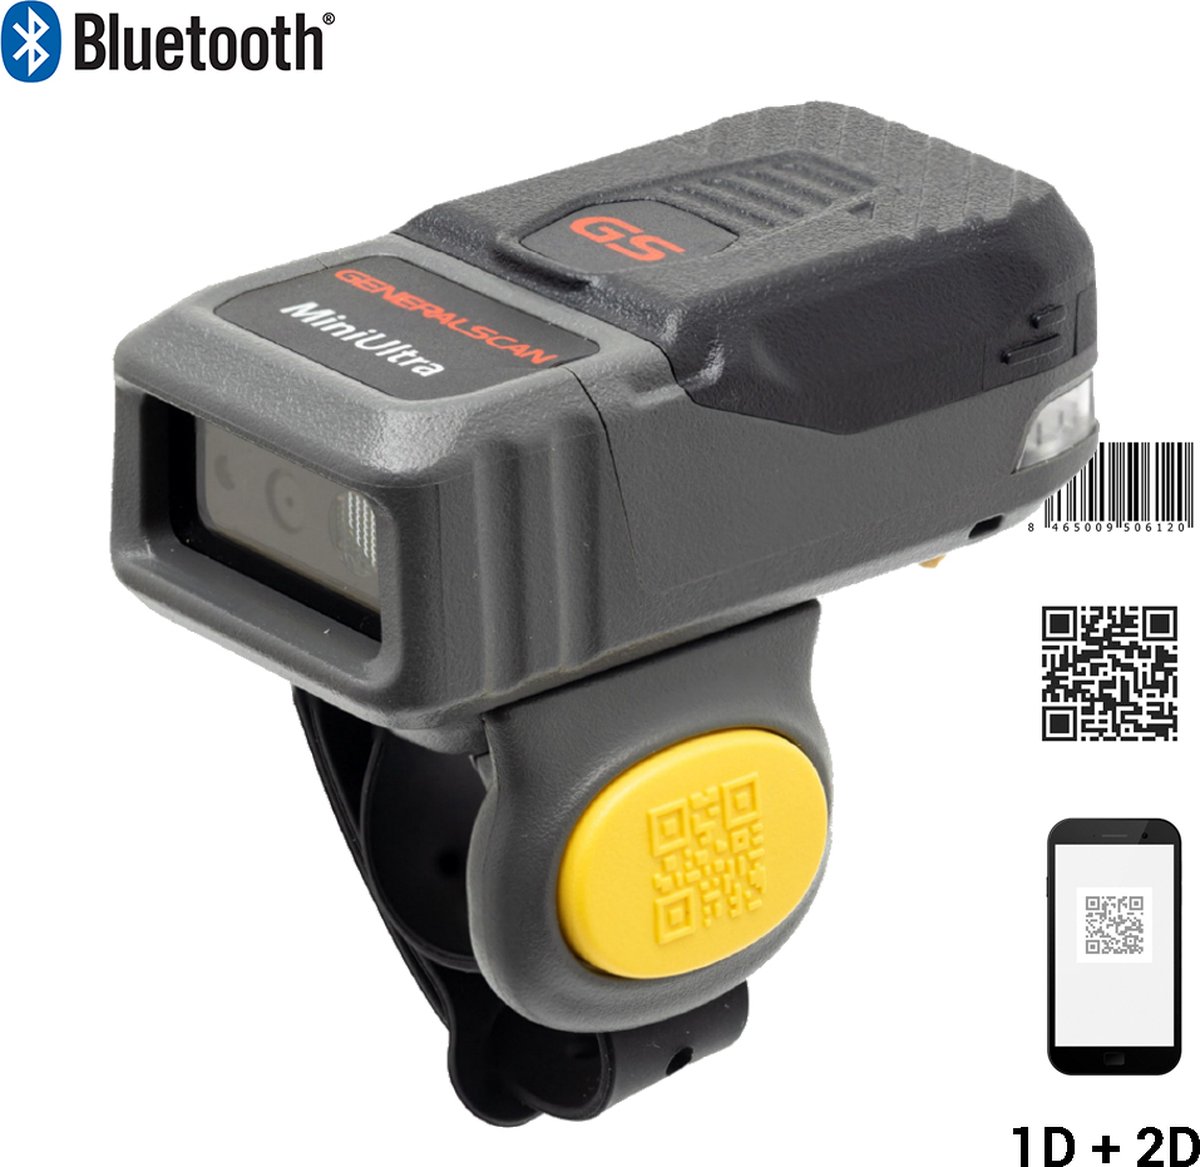 Generalscan GS R5524 - Bluetooth 2D Barcode scanner - Ringscanner - 2D-barcodes - Handscanner